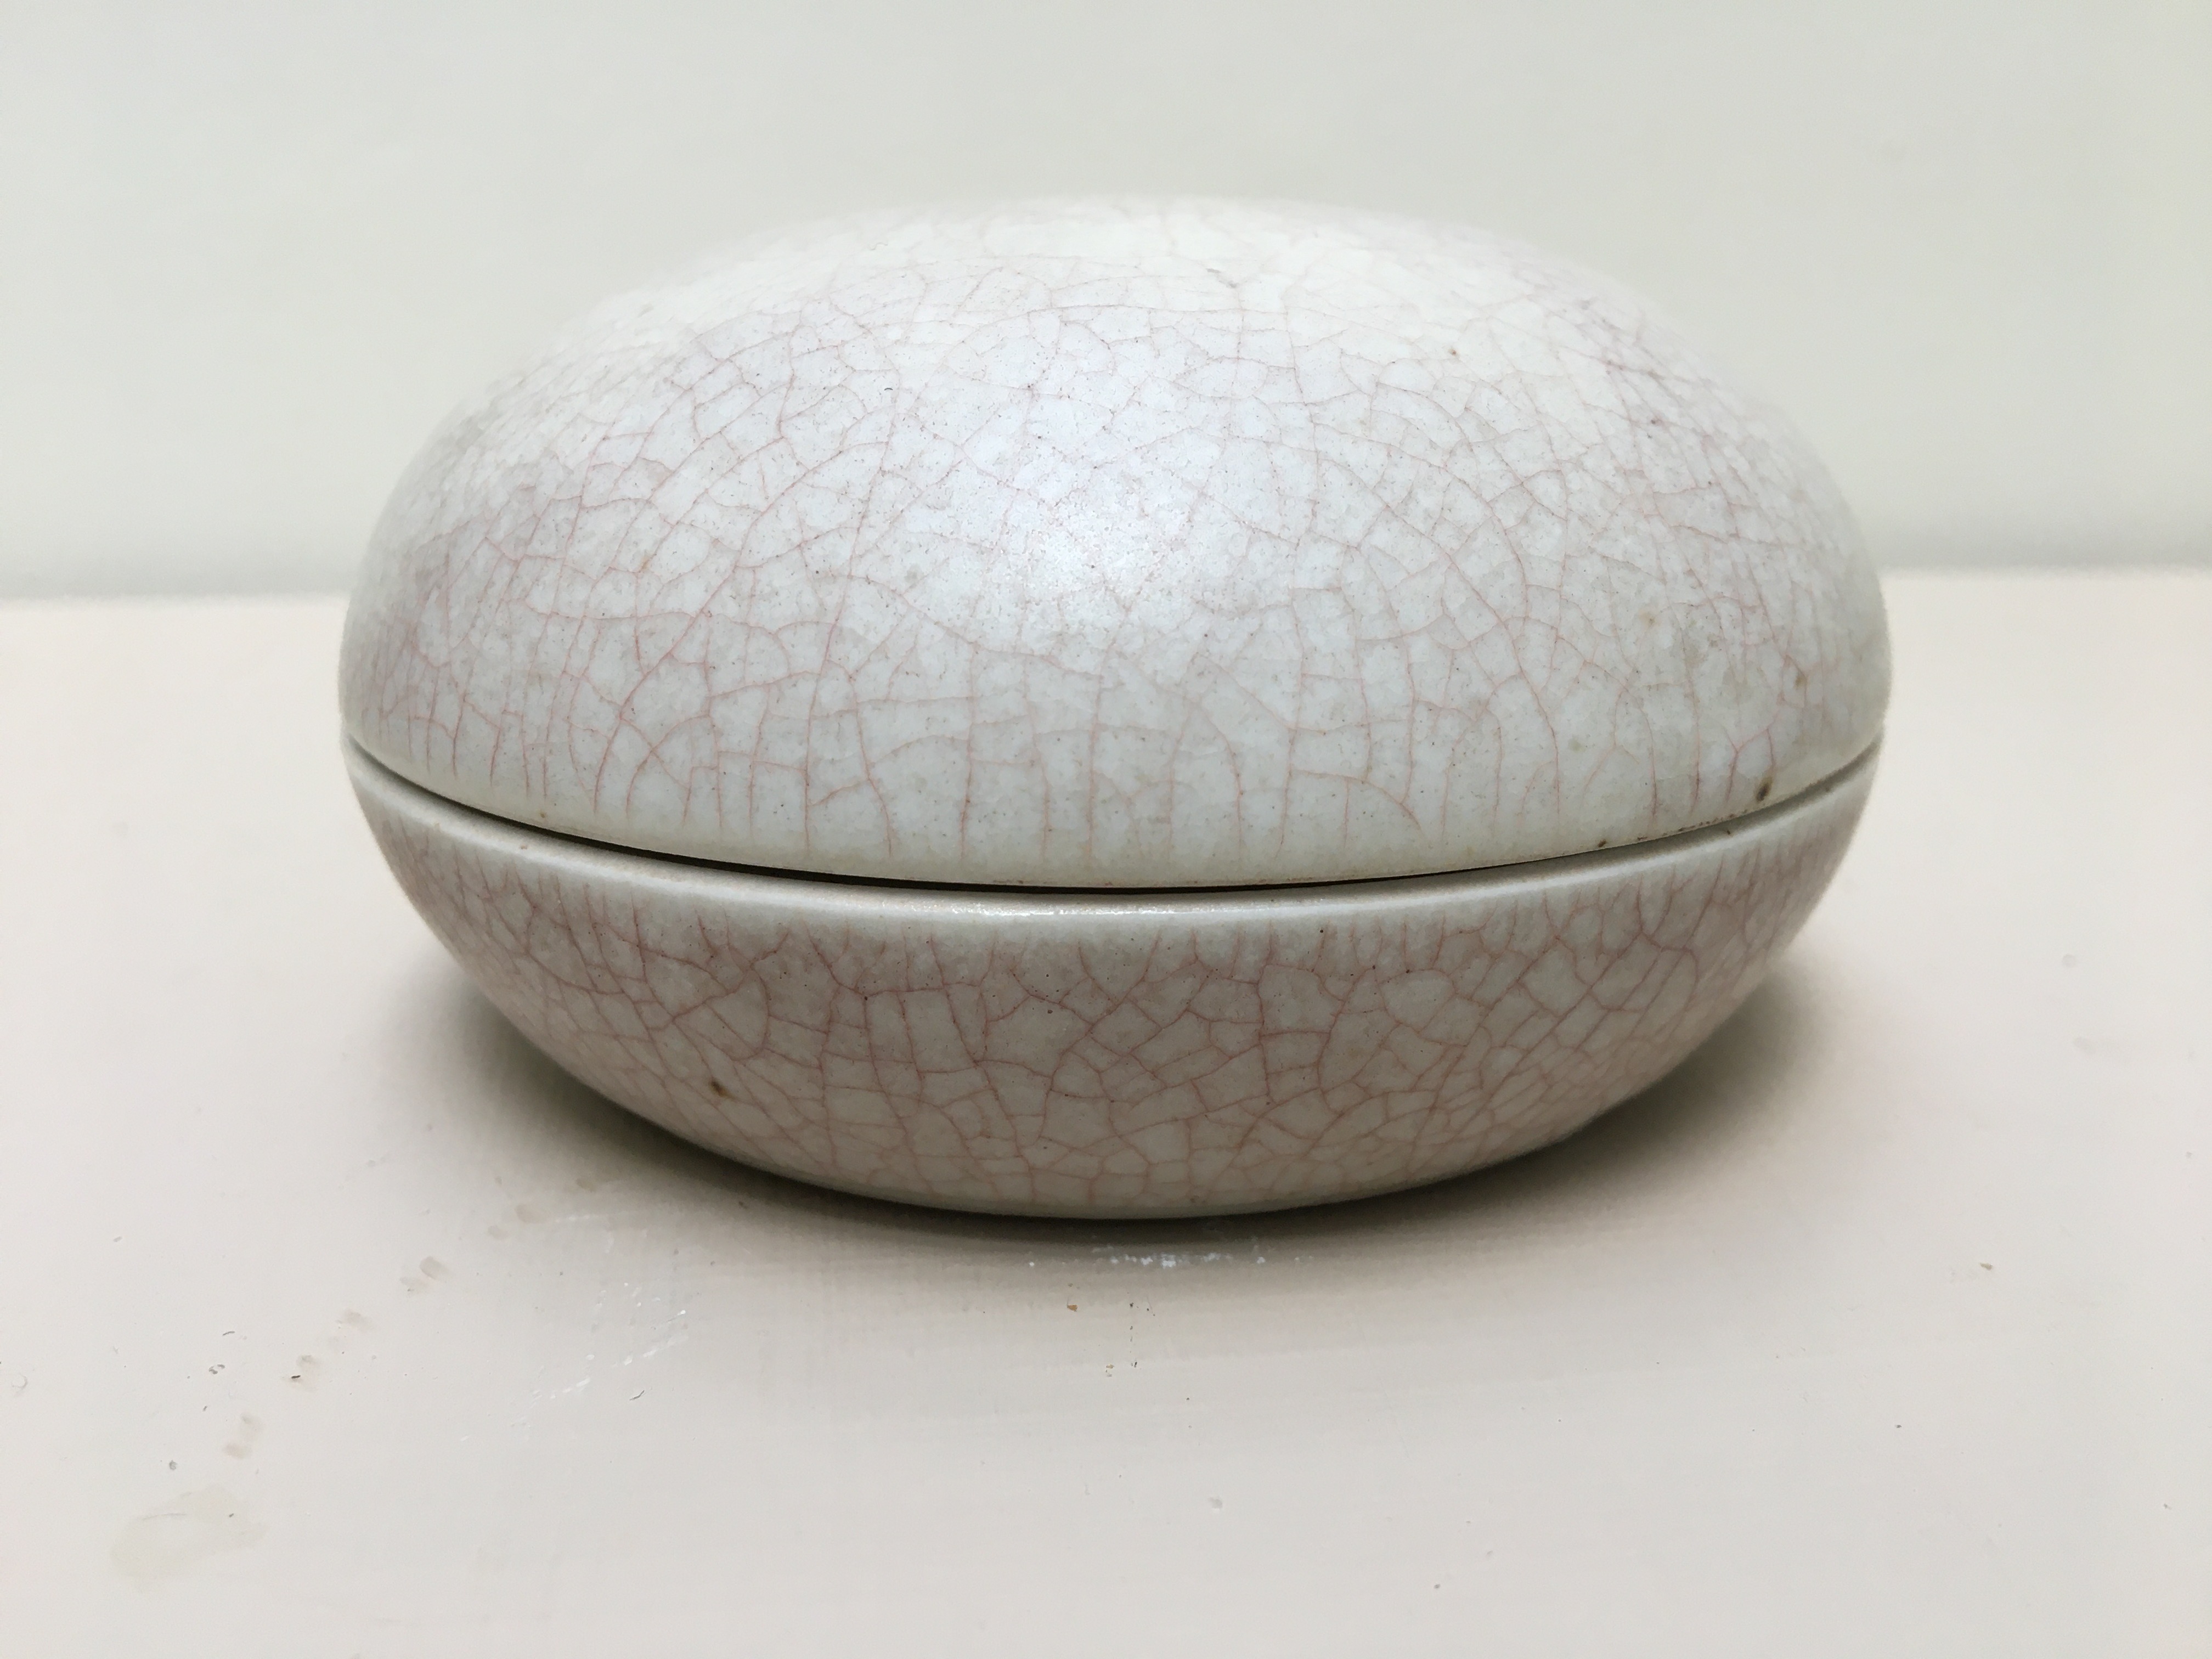 DL Wheel-thrown porcelain